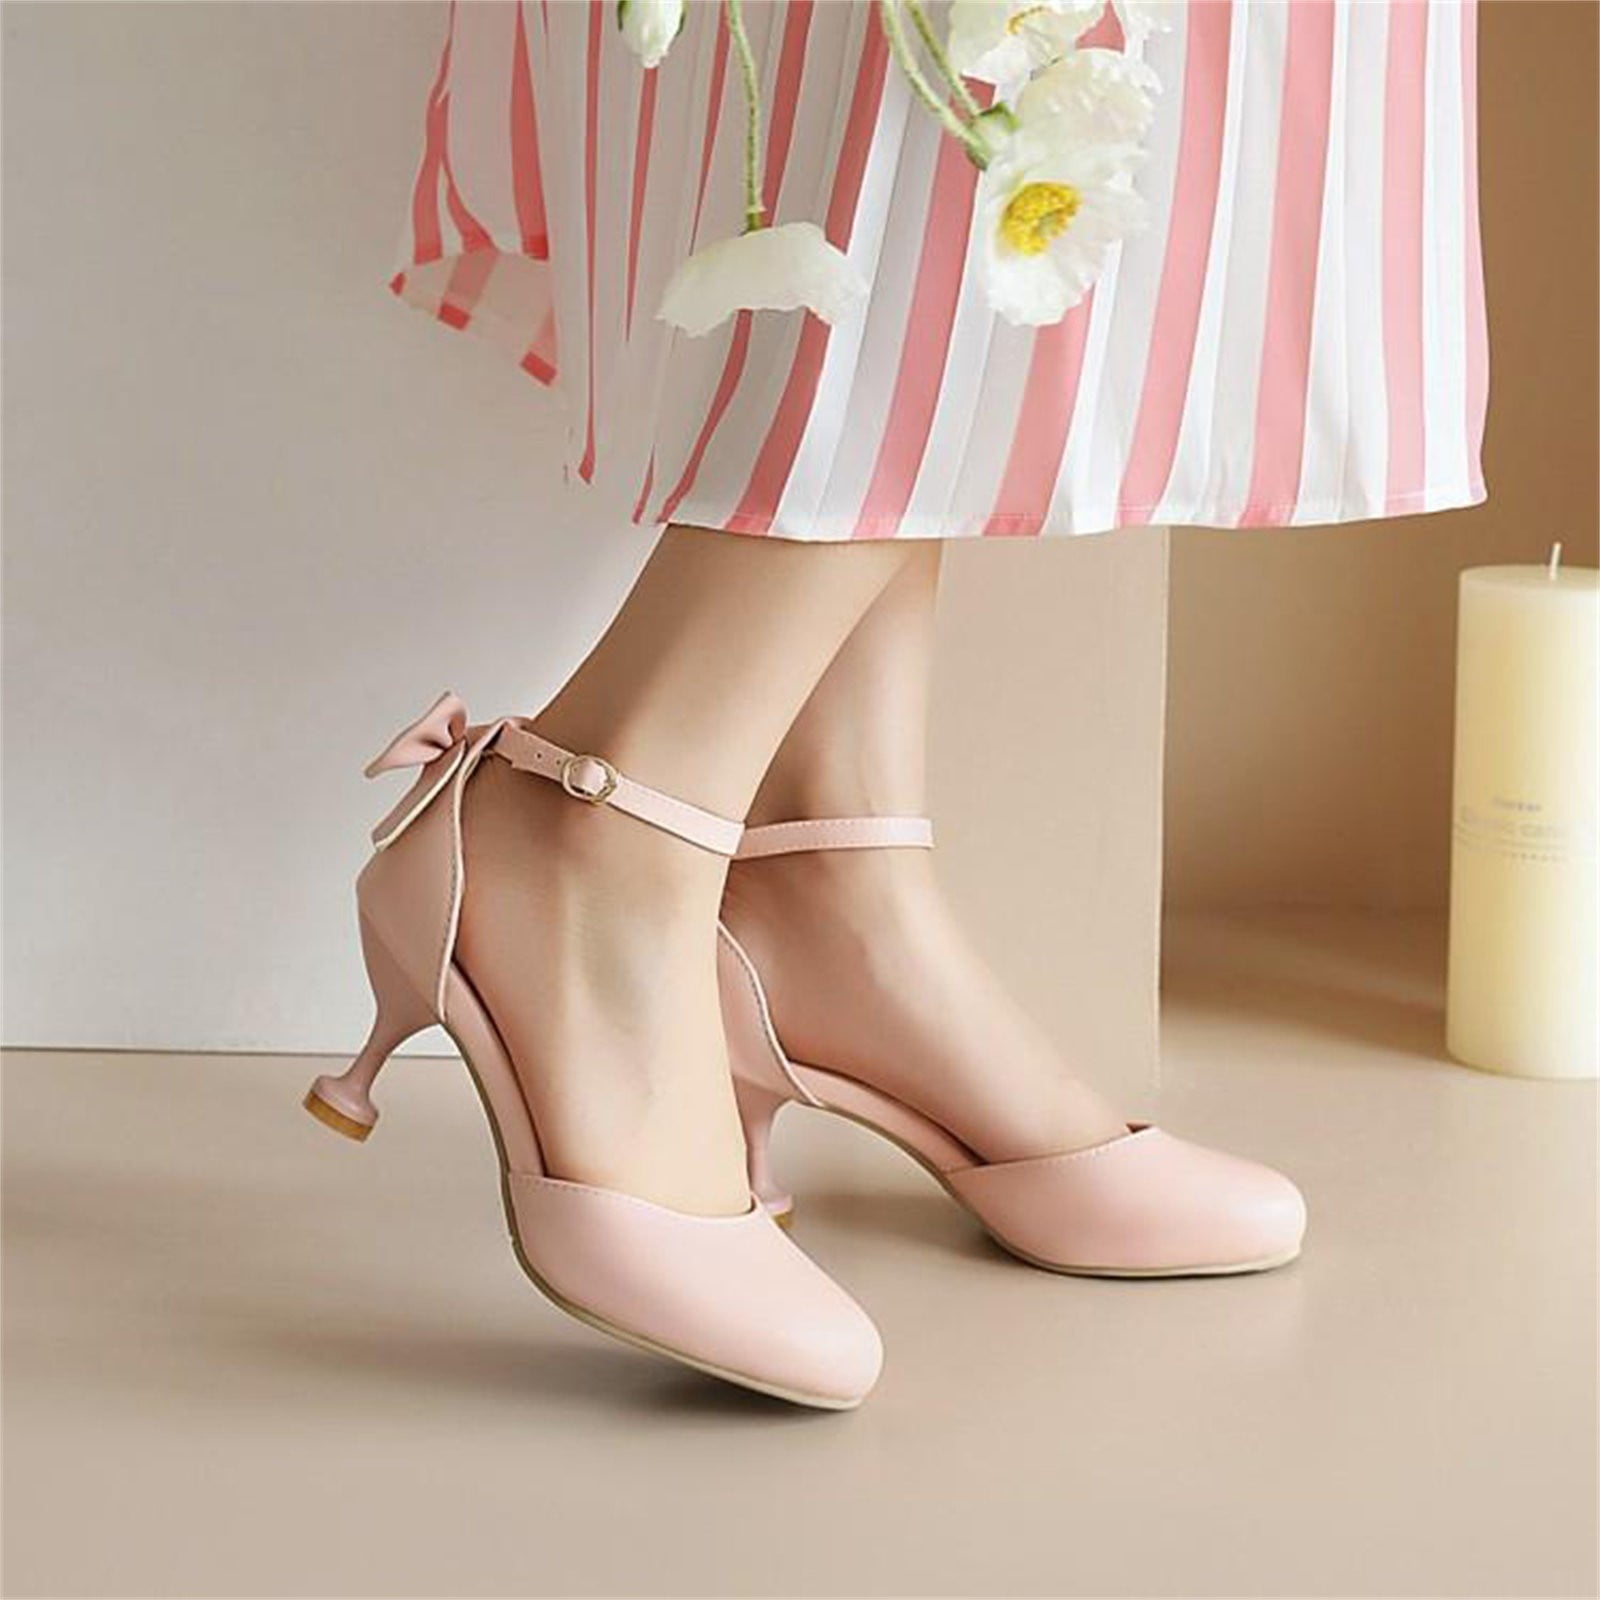 Red Satin Peep Toe High Heel Simple Classy Prom Shoes – Okdresses